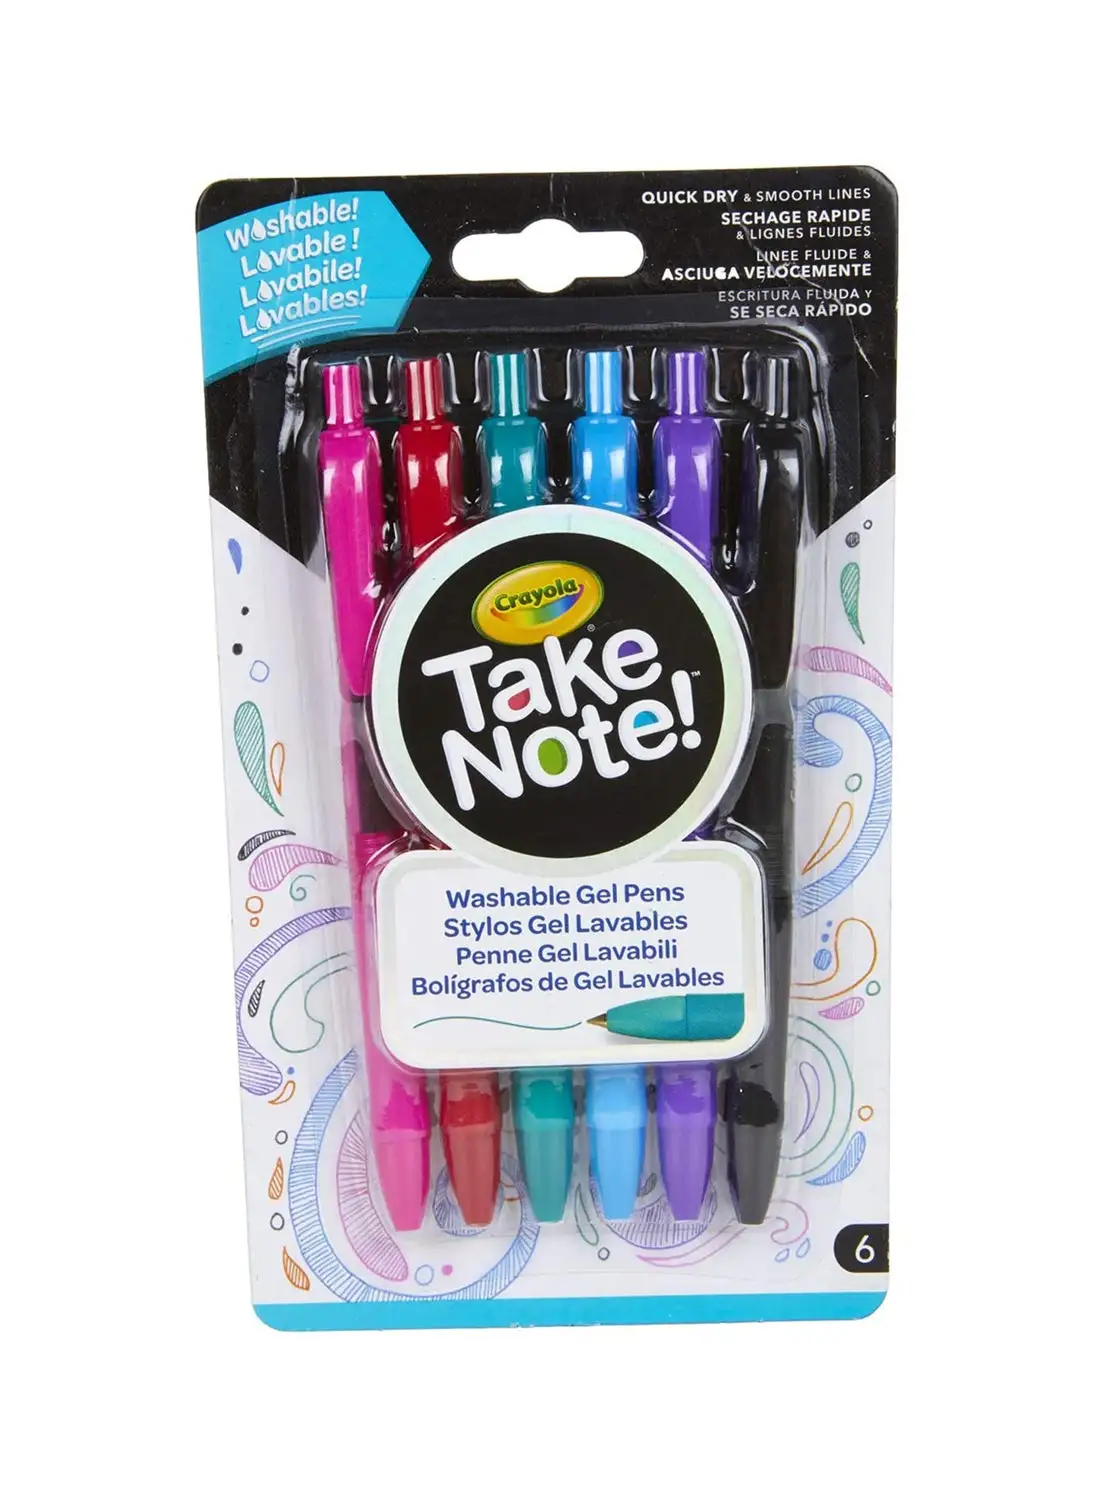 Crayola 6 ct. Take Note! Washable Gel Pens 19.4X11.5X2cm